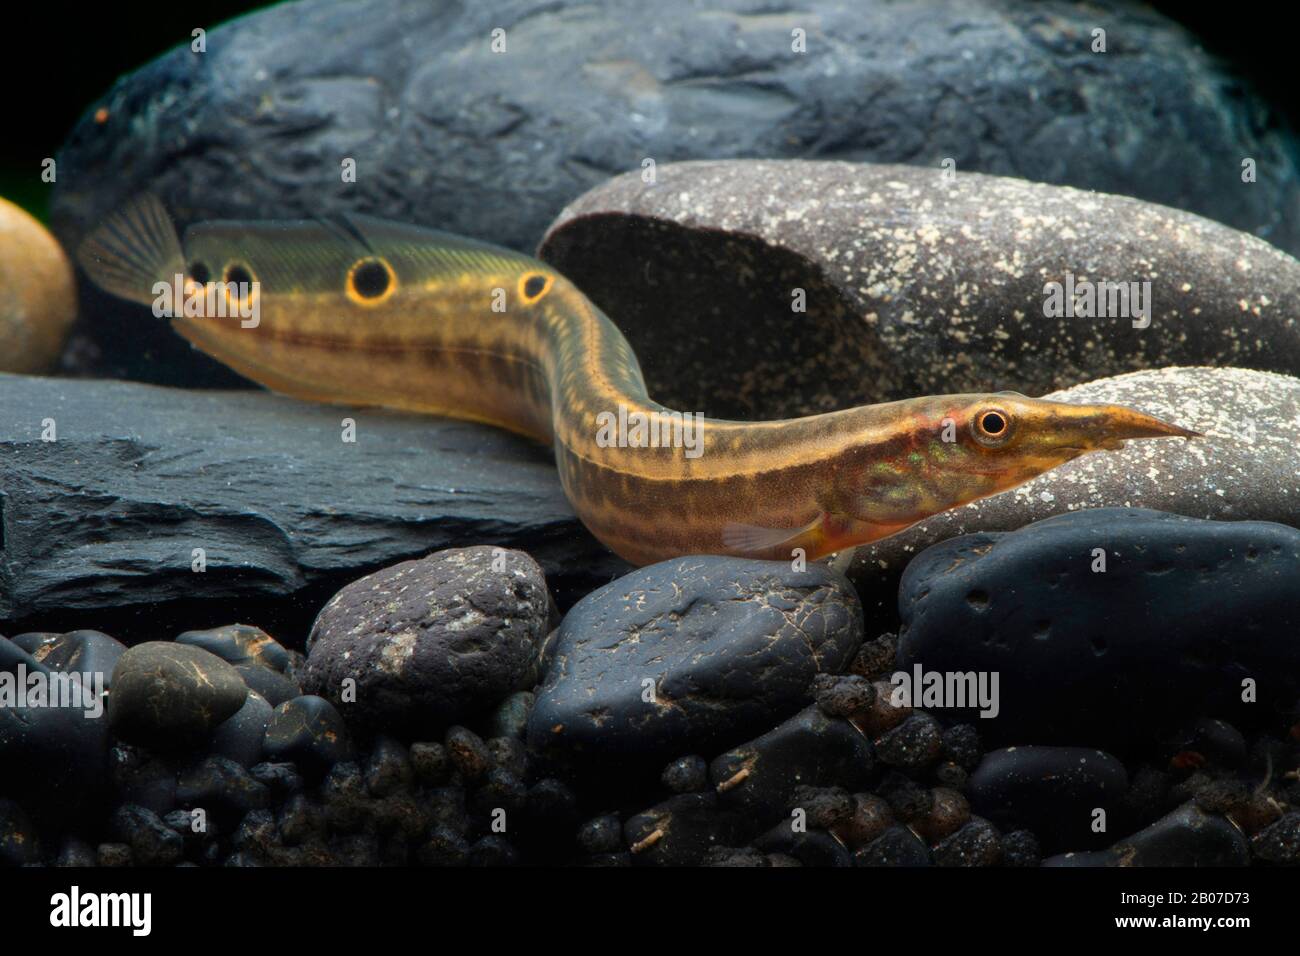 Peacock eel (Macrognathus siamensis), on stones in water Stock Photo